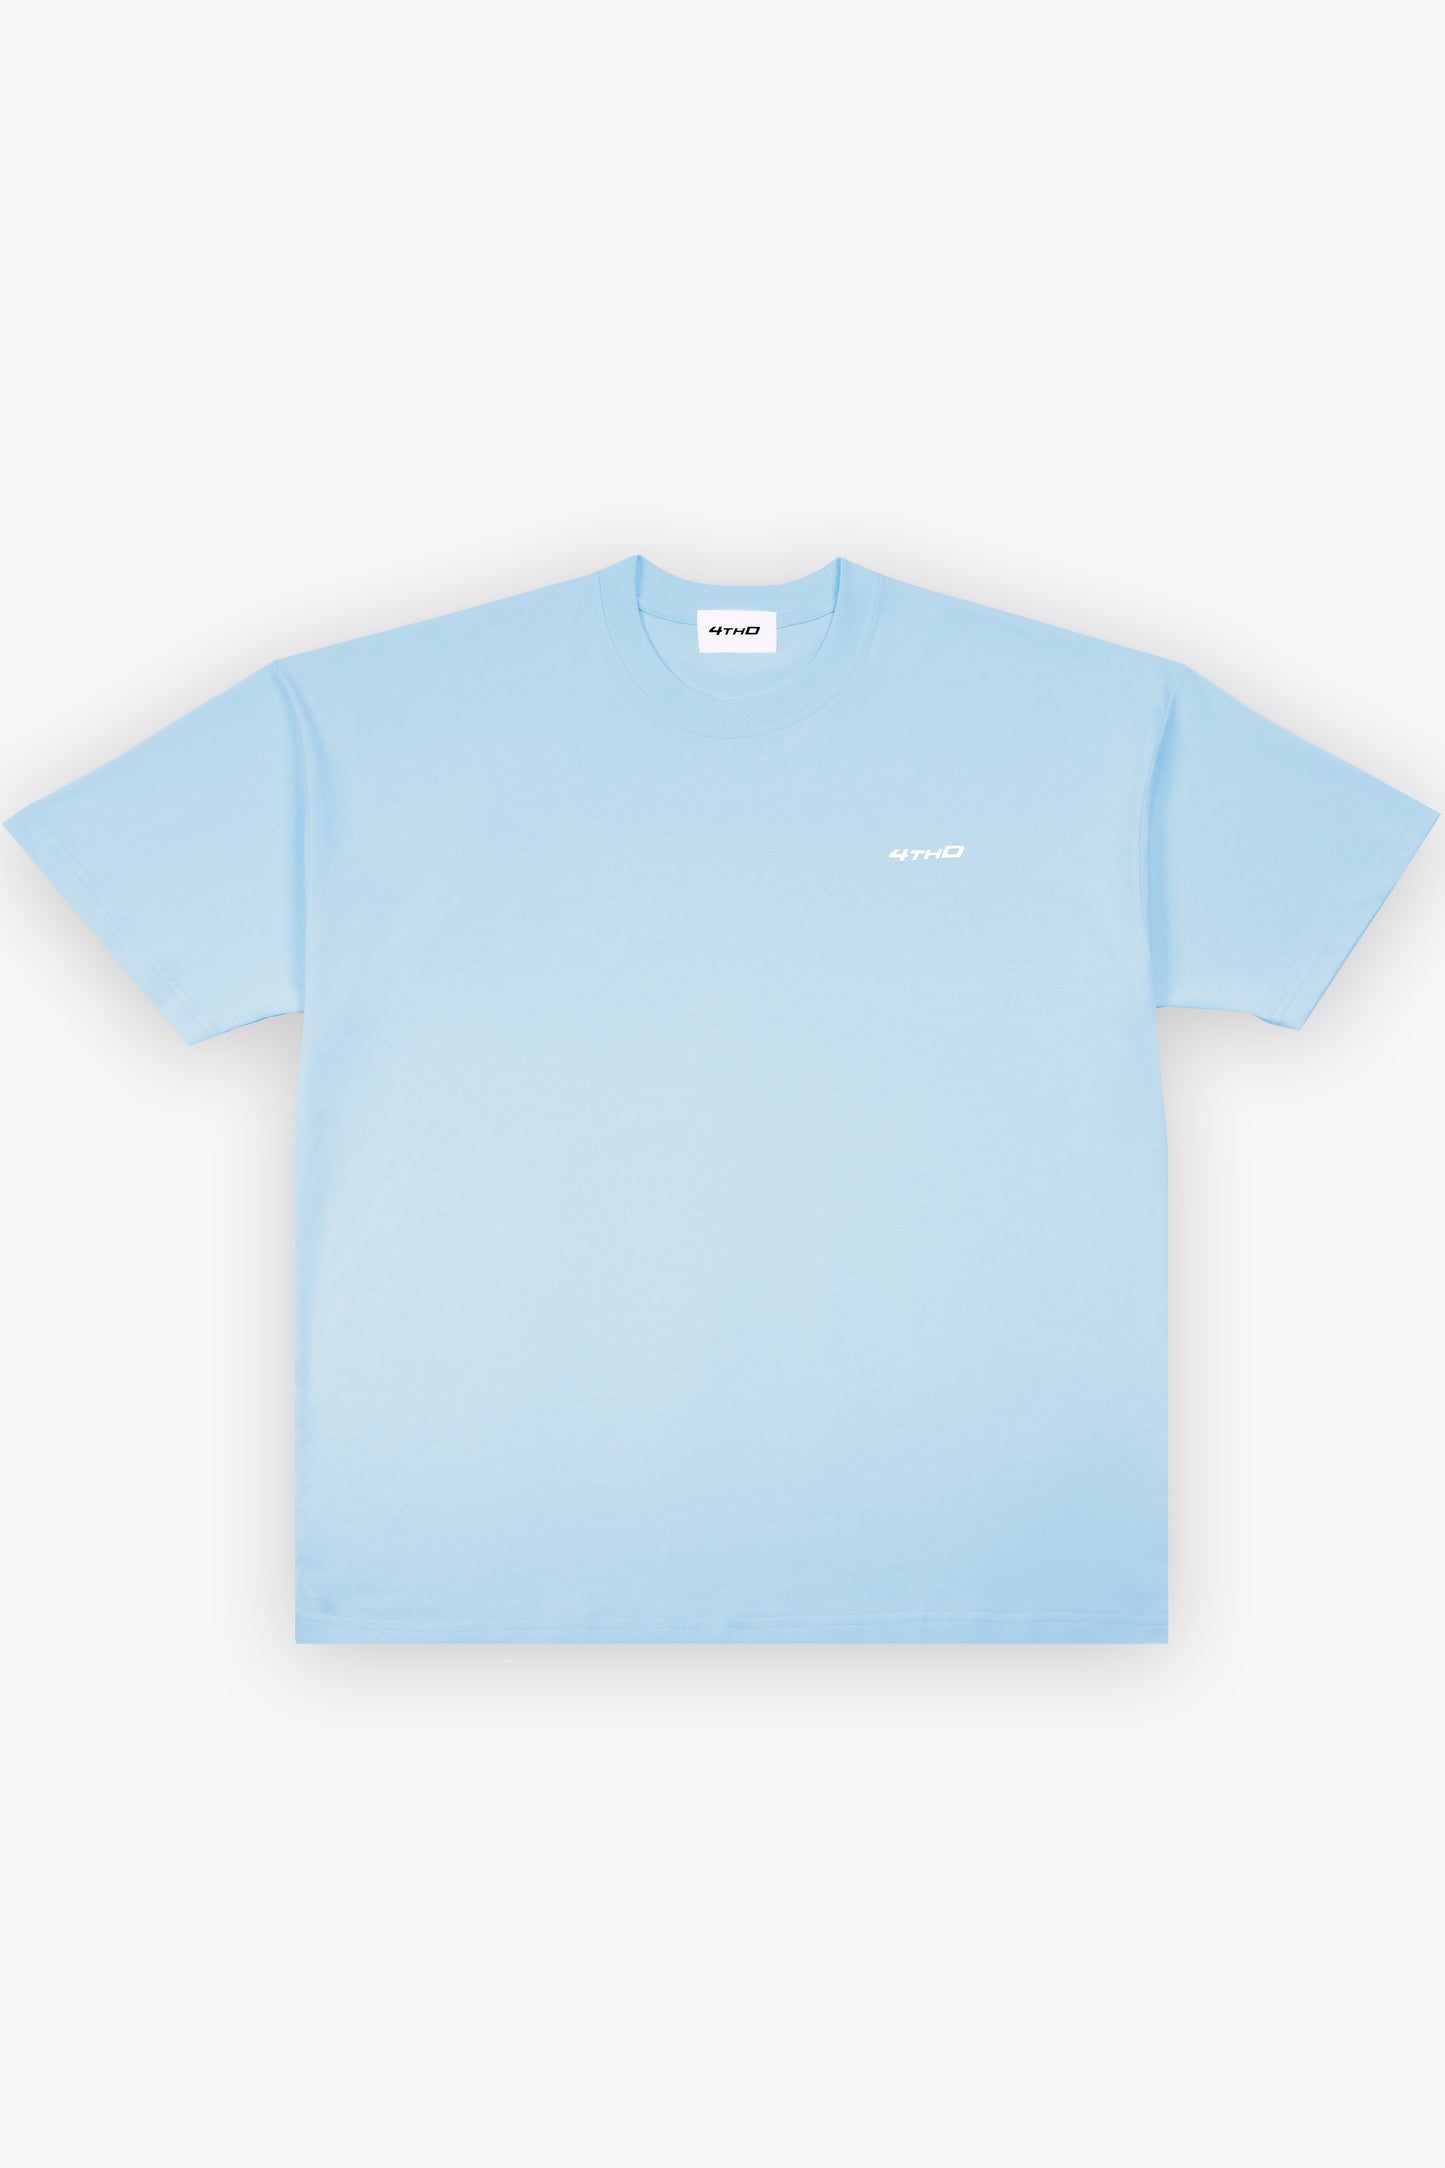 Colors Shirt - Baby Blue